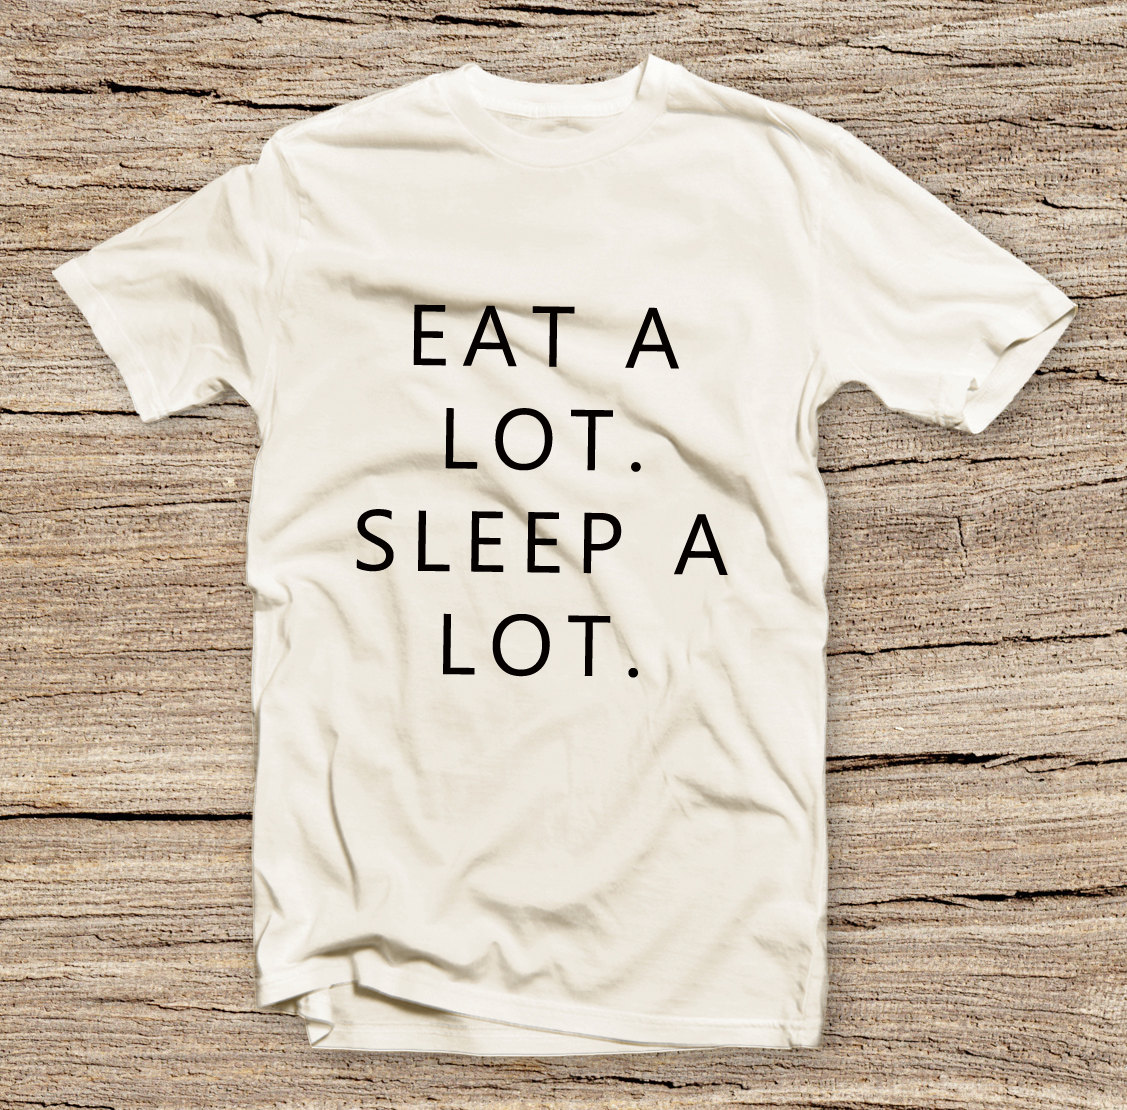 Pts-133 Eat A Lot Sleep A Lot T-shirt, Fashion Shirts, Funny T-shirt, Cute T-shirts